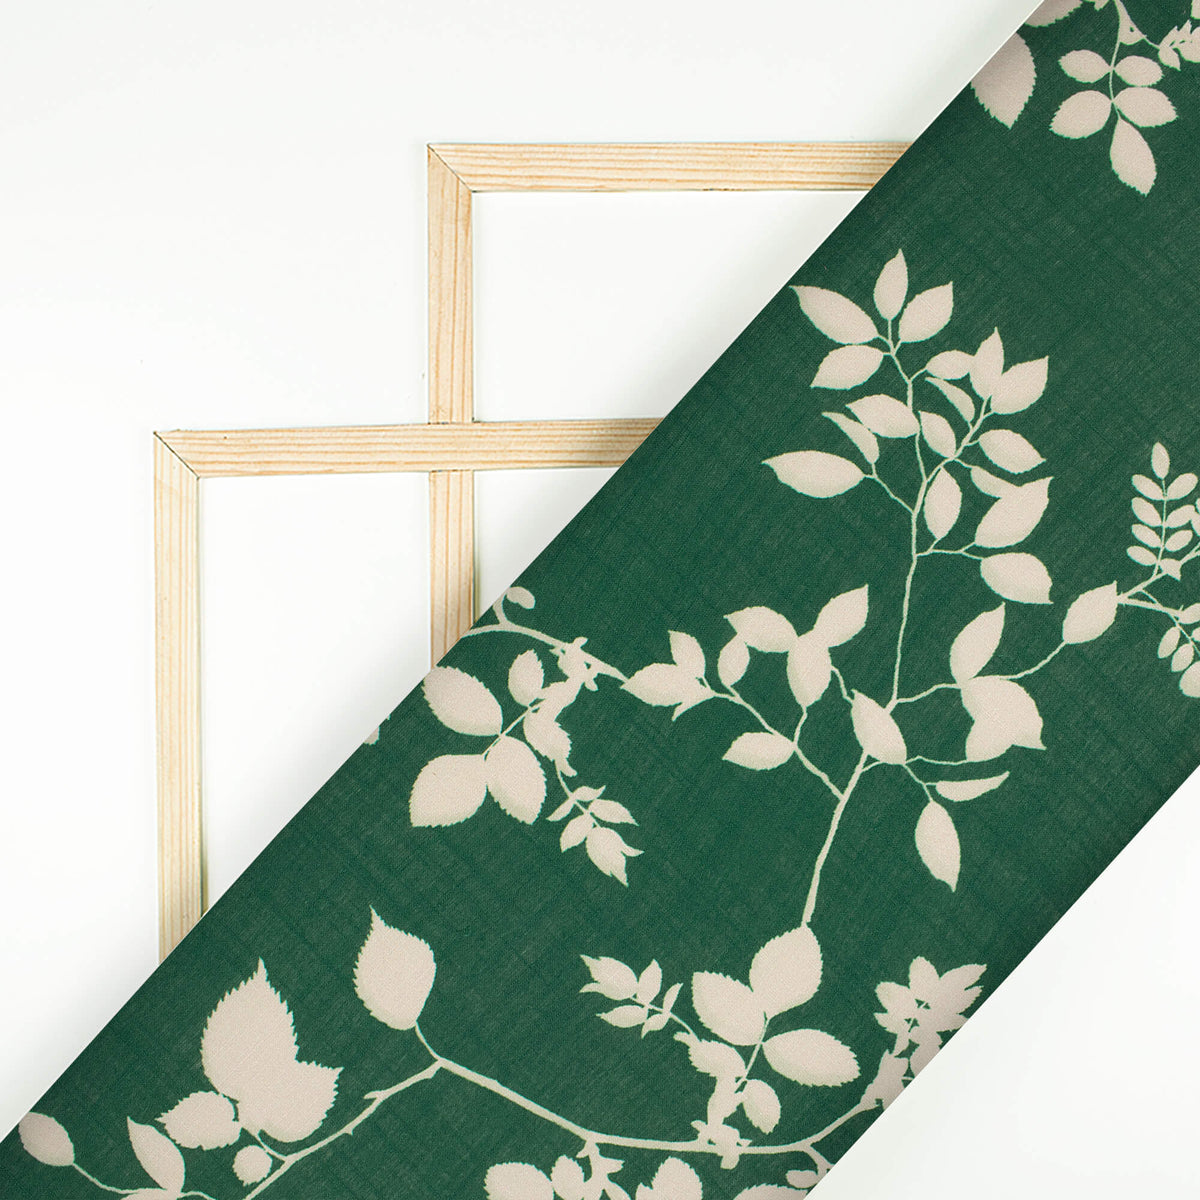 Bottle Green And Beige Leaf Pattern Digital Print Poly Linen Fabric